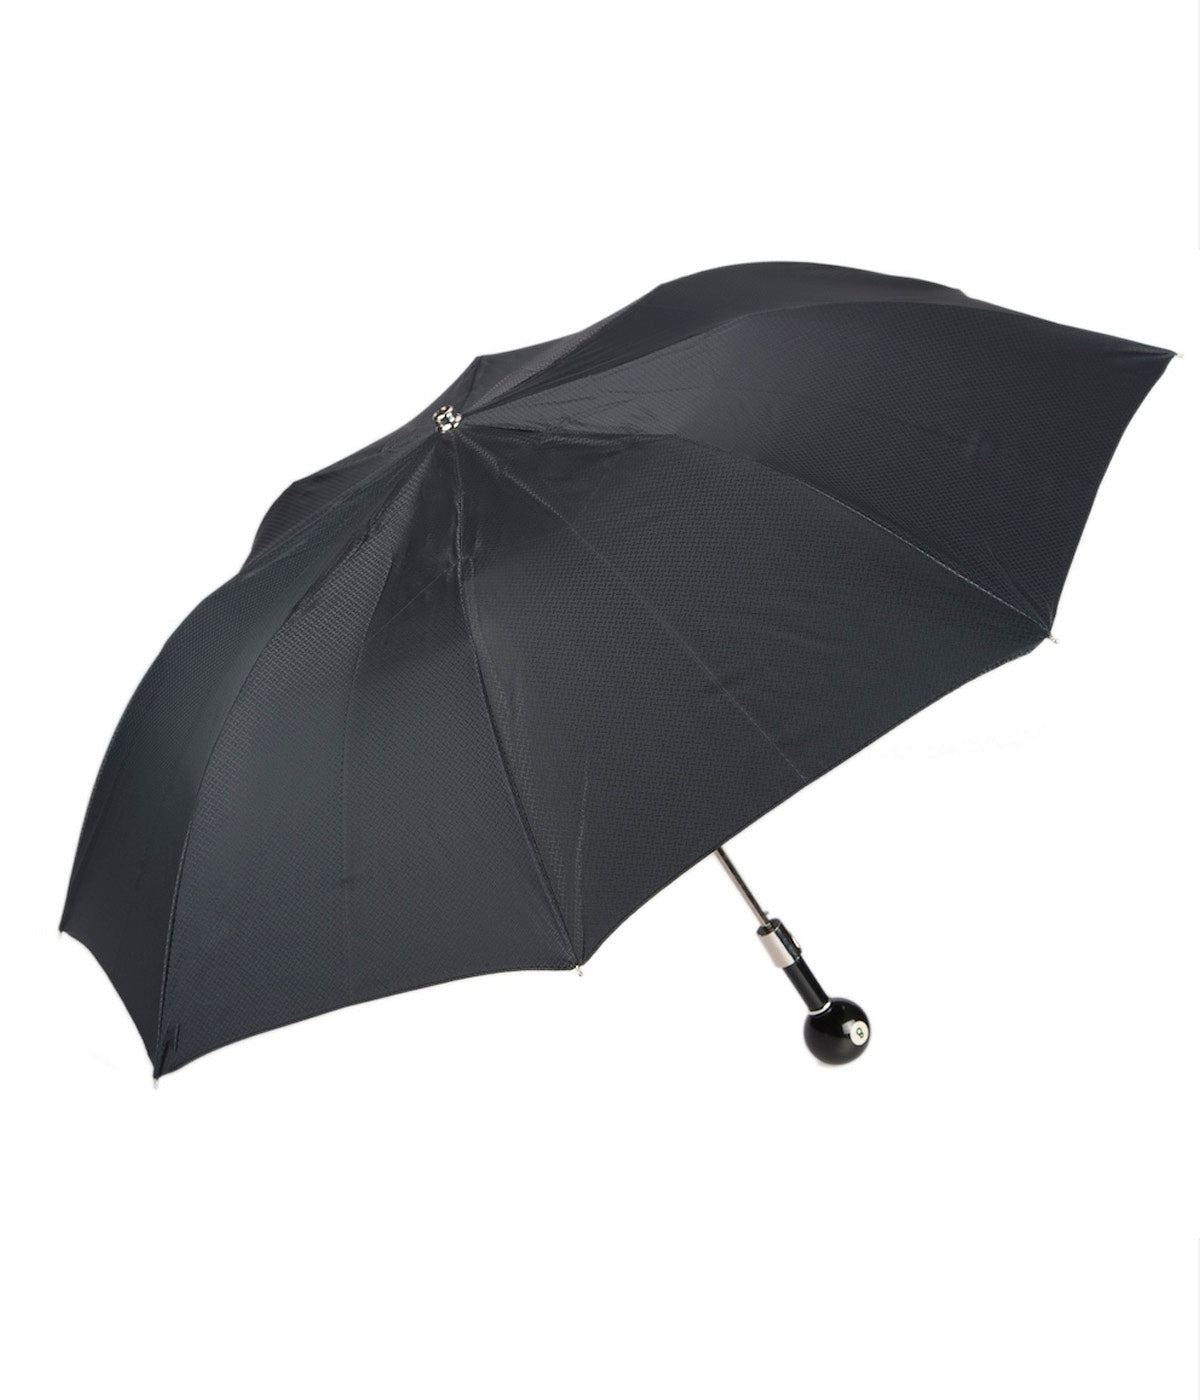 Billards Folding Umbrella in Black